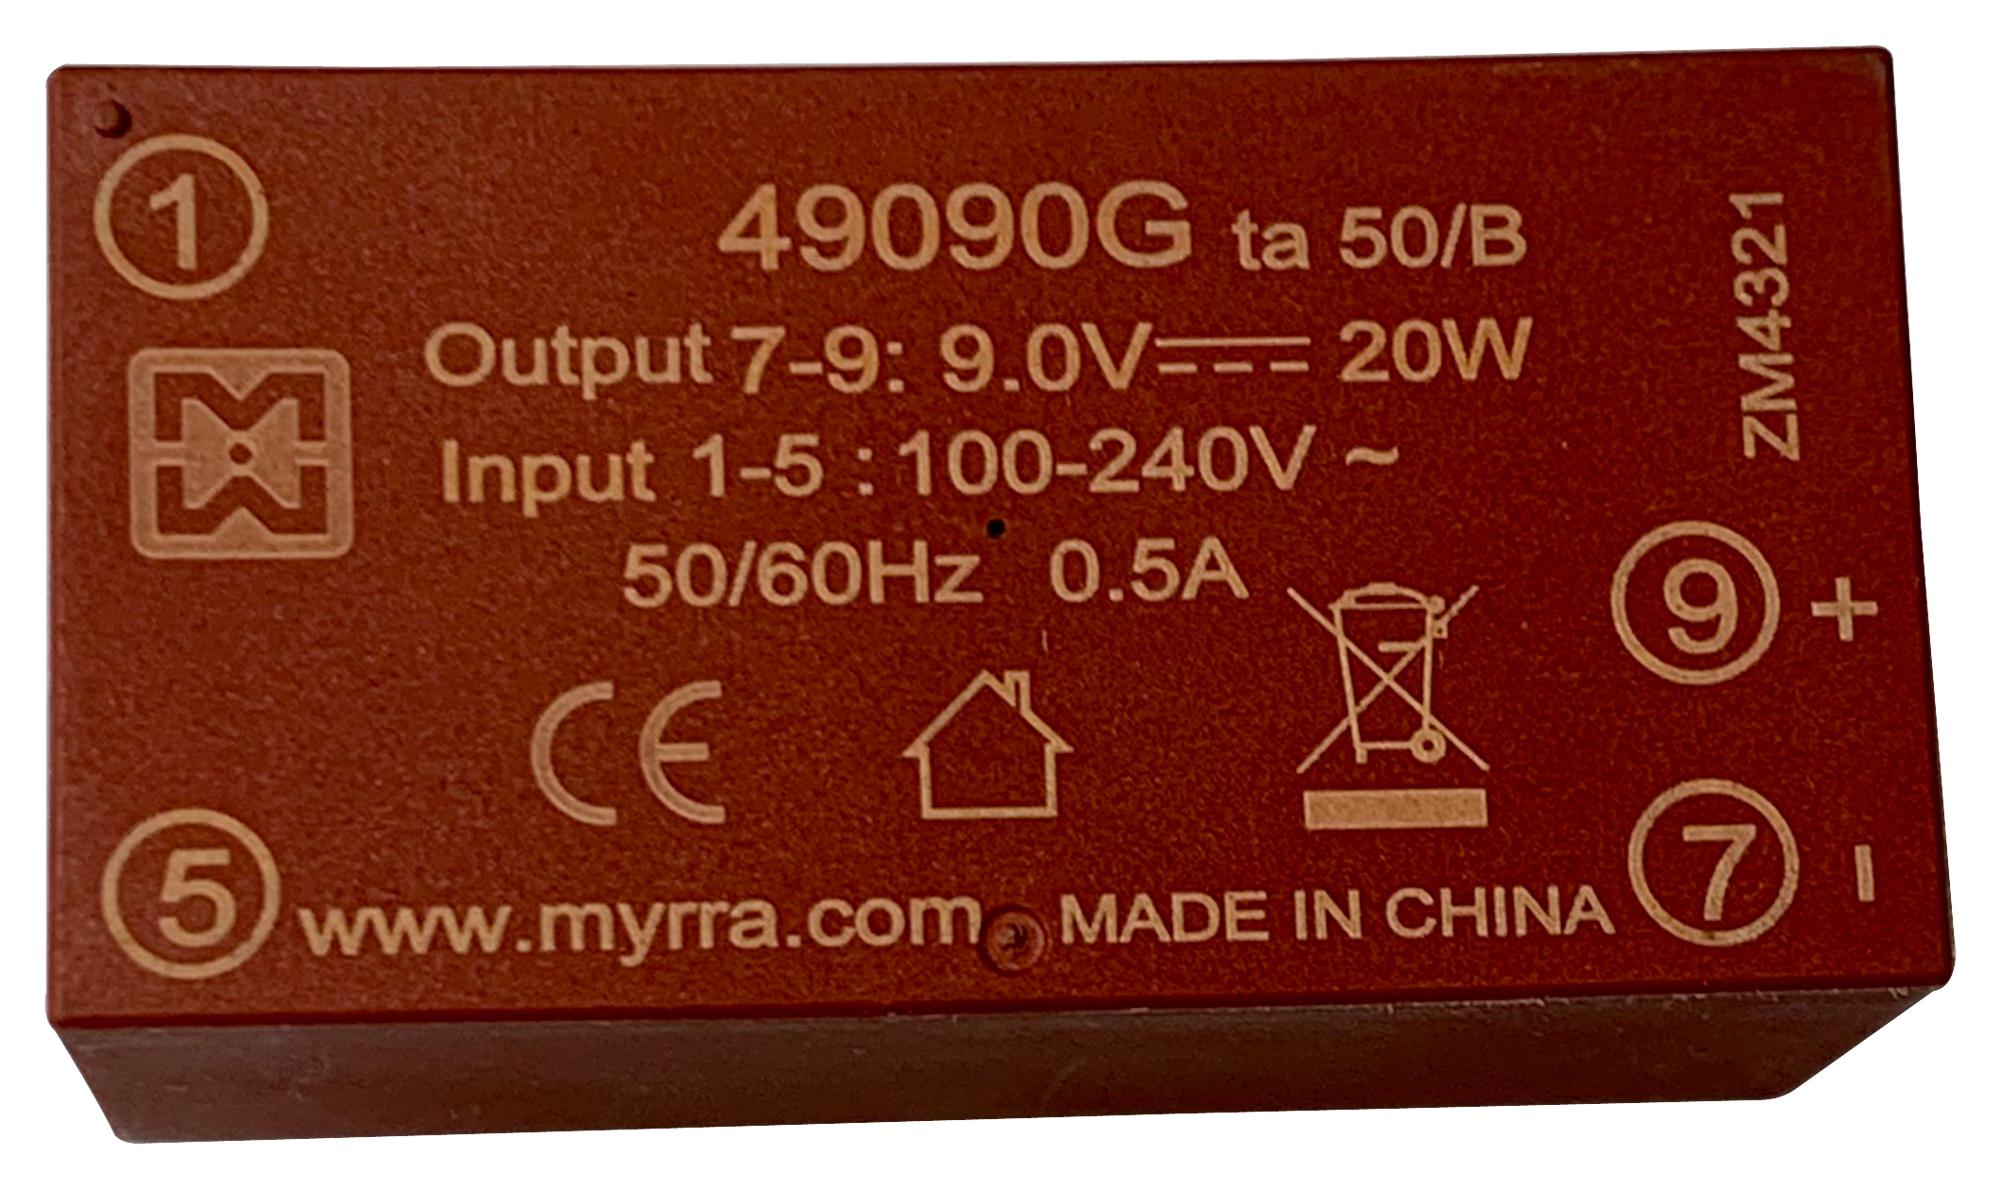 Myrra 49090G Power Supply, Ac-Dc, 9V, 2.2A